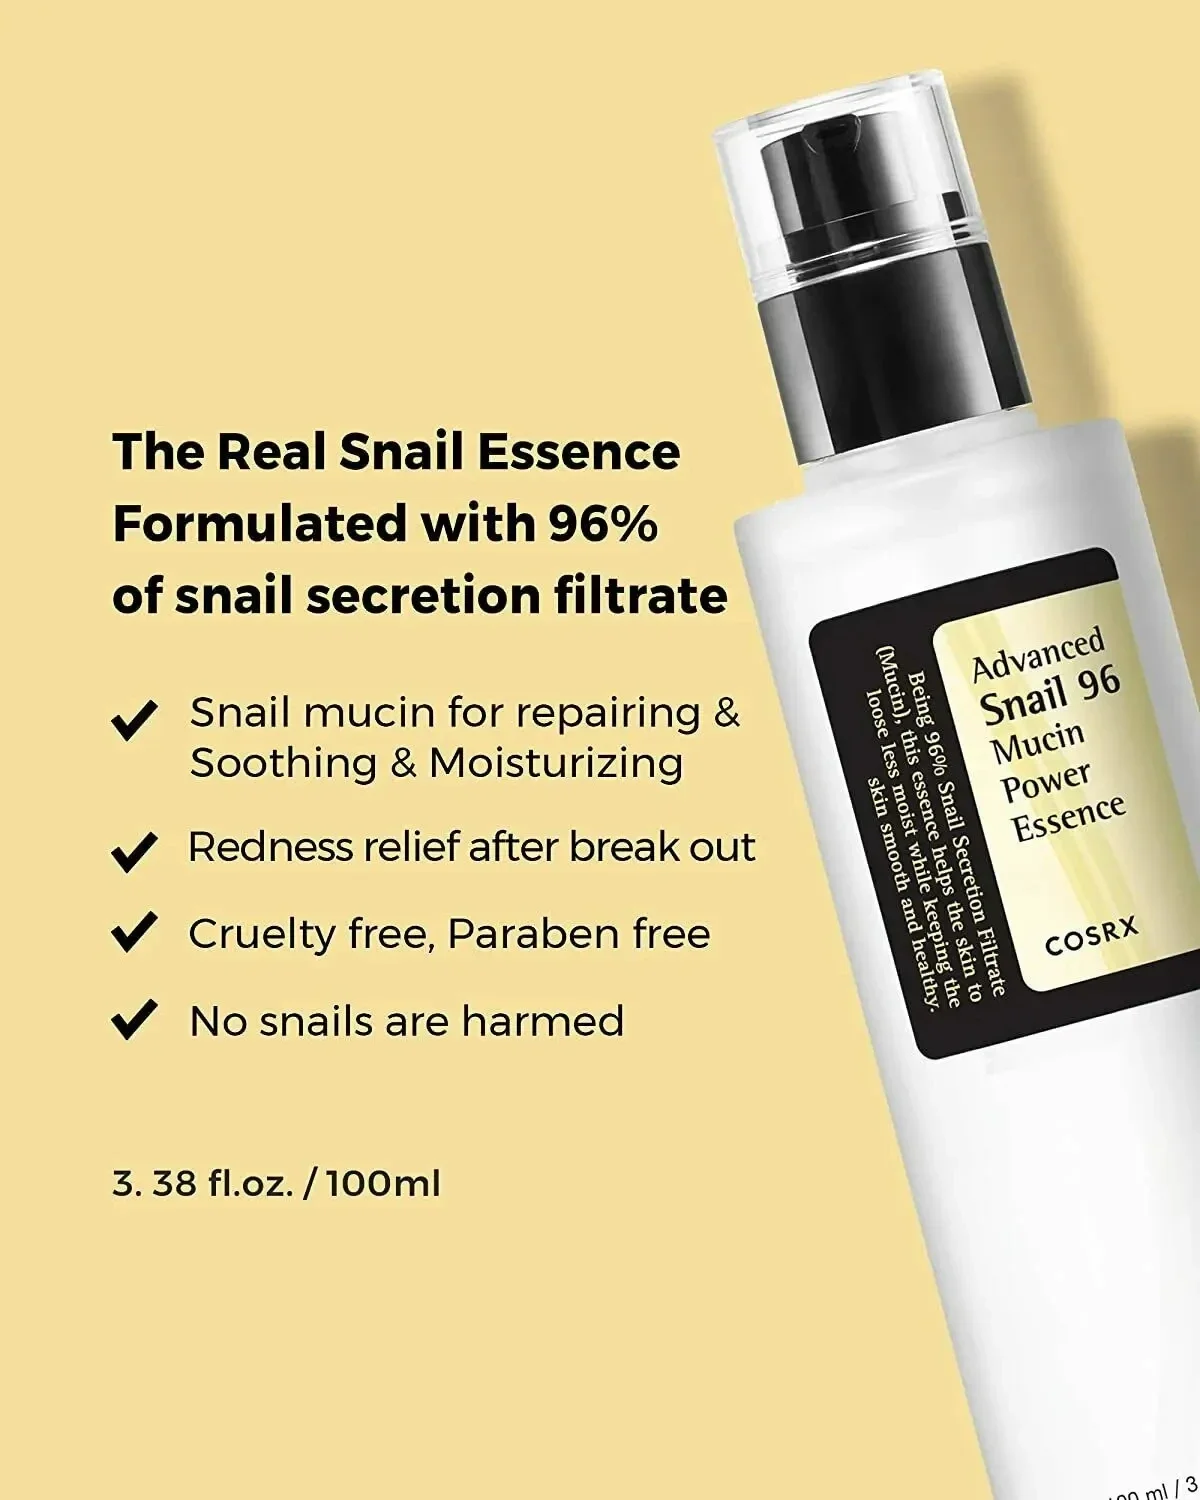 COSRX Advanced Snail 96 Mucin Power Essence 100ml Face Anti-aging Care Cream Whiten Moisturizing Original Korea Cosmetic